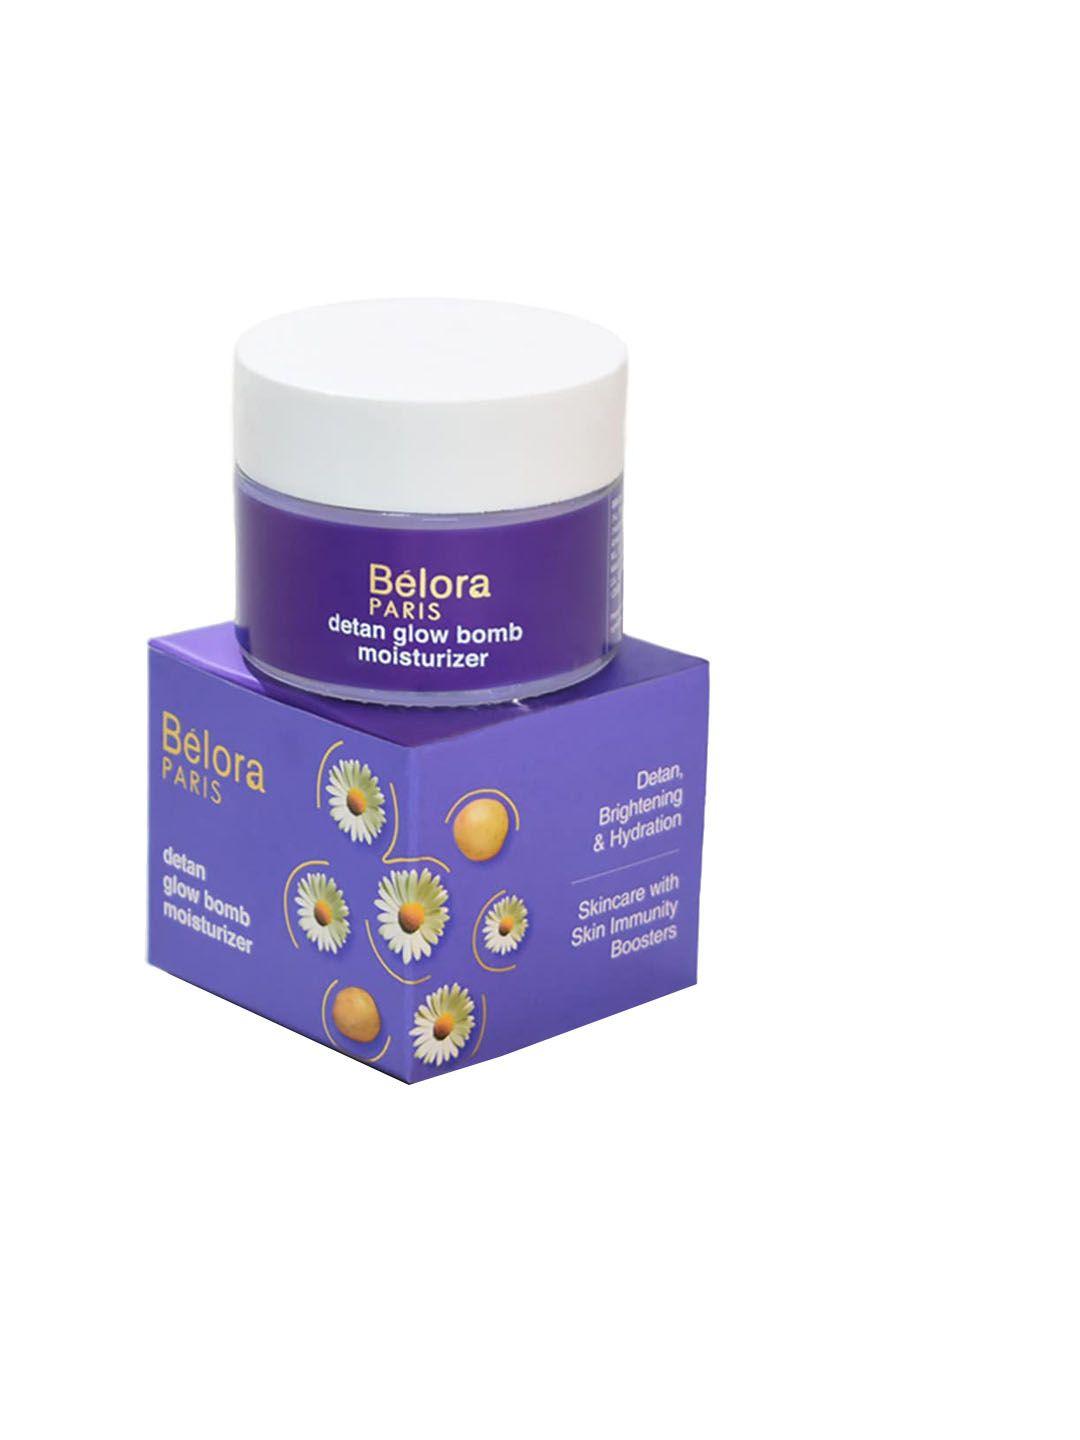 belora paris detan glow bomb moisturizer with potato pulp & chamomile extracts - 50ml